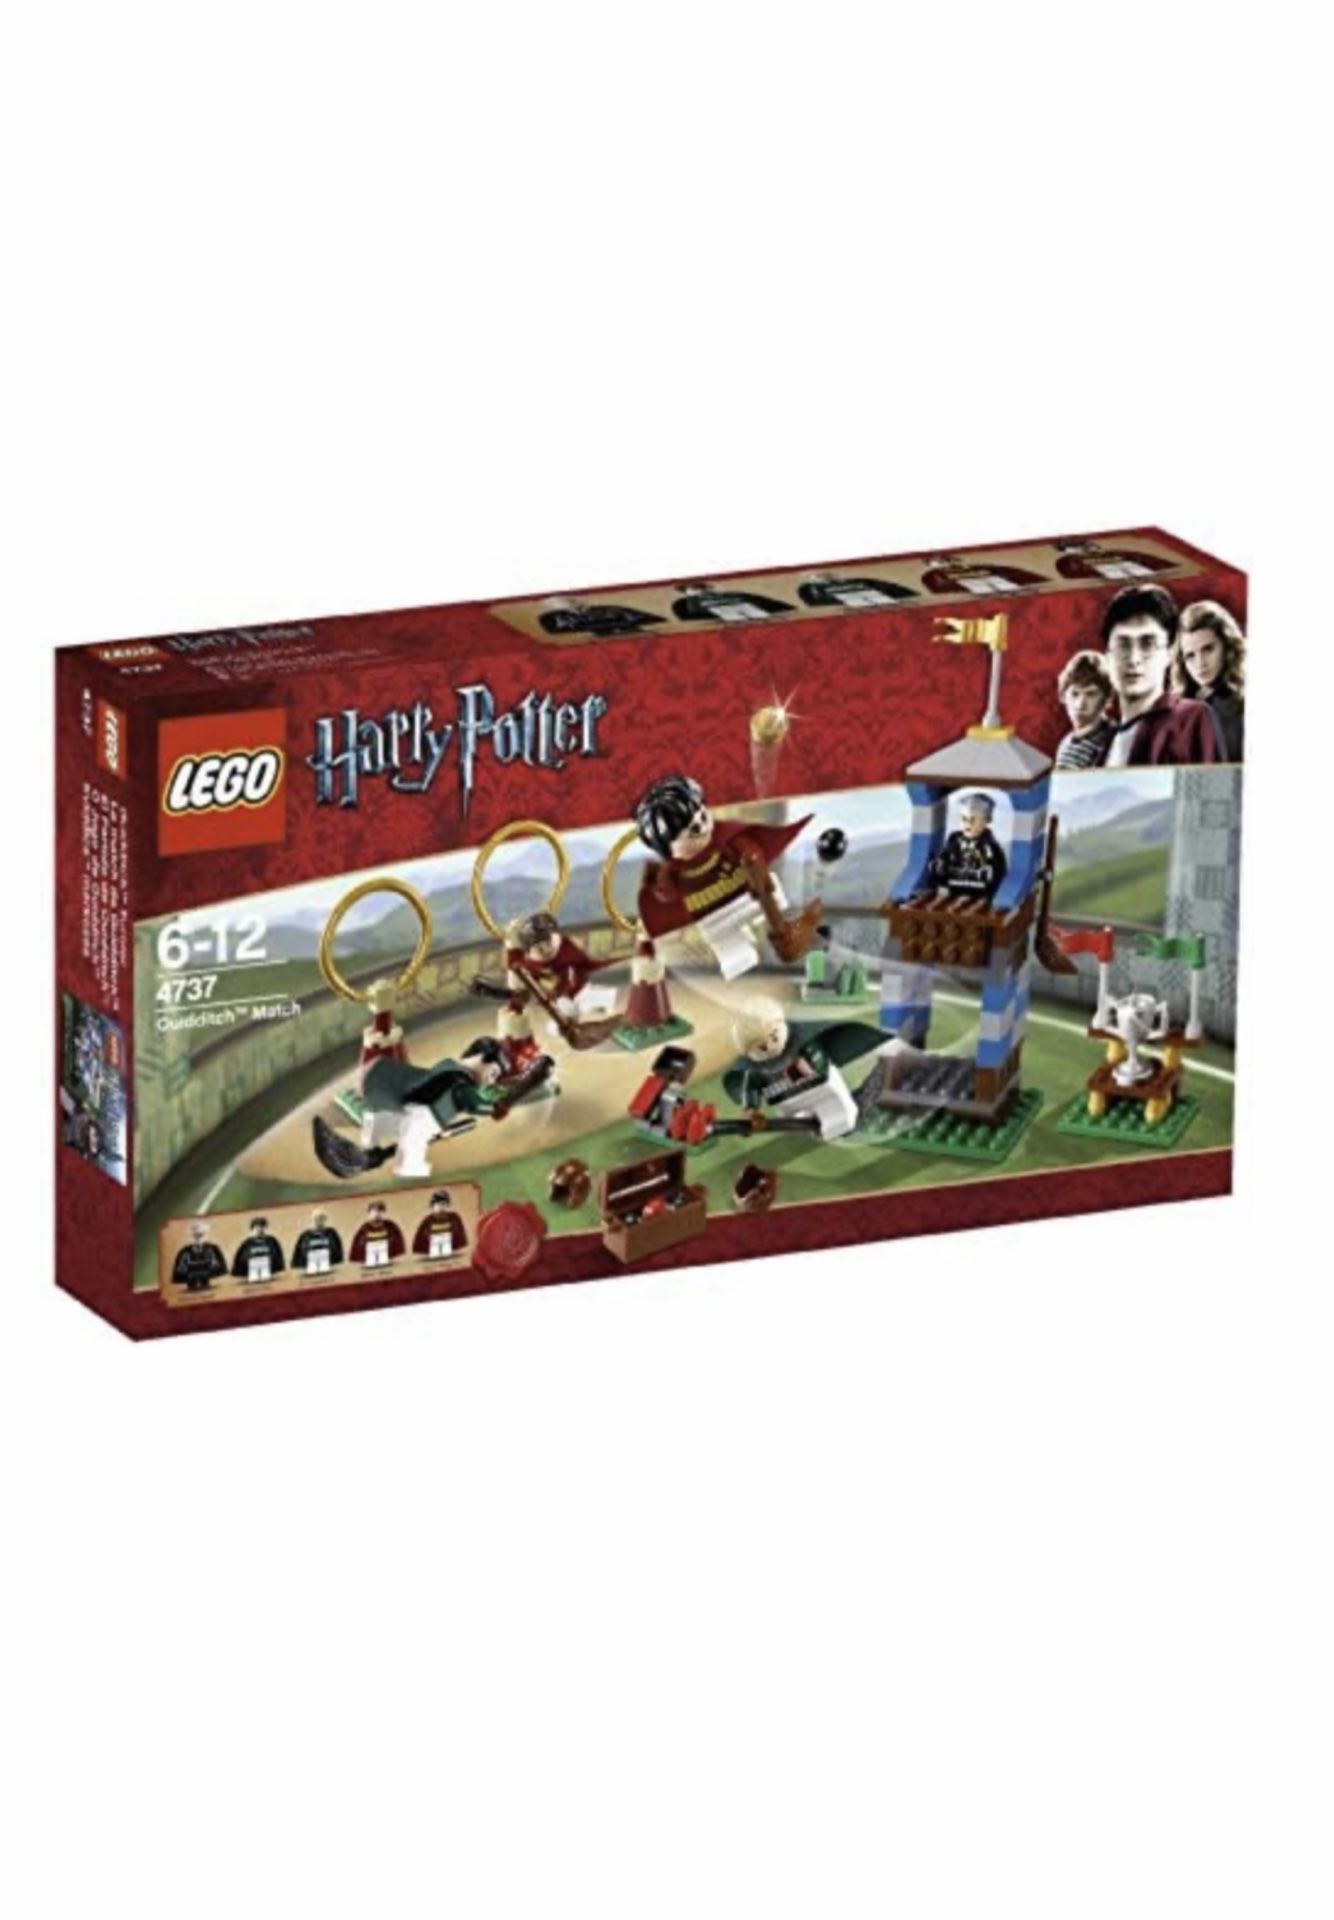 LEGO Harry Potter Quidditch Match 4737 